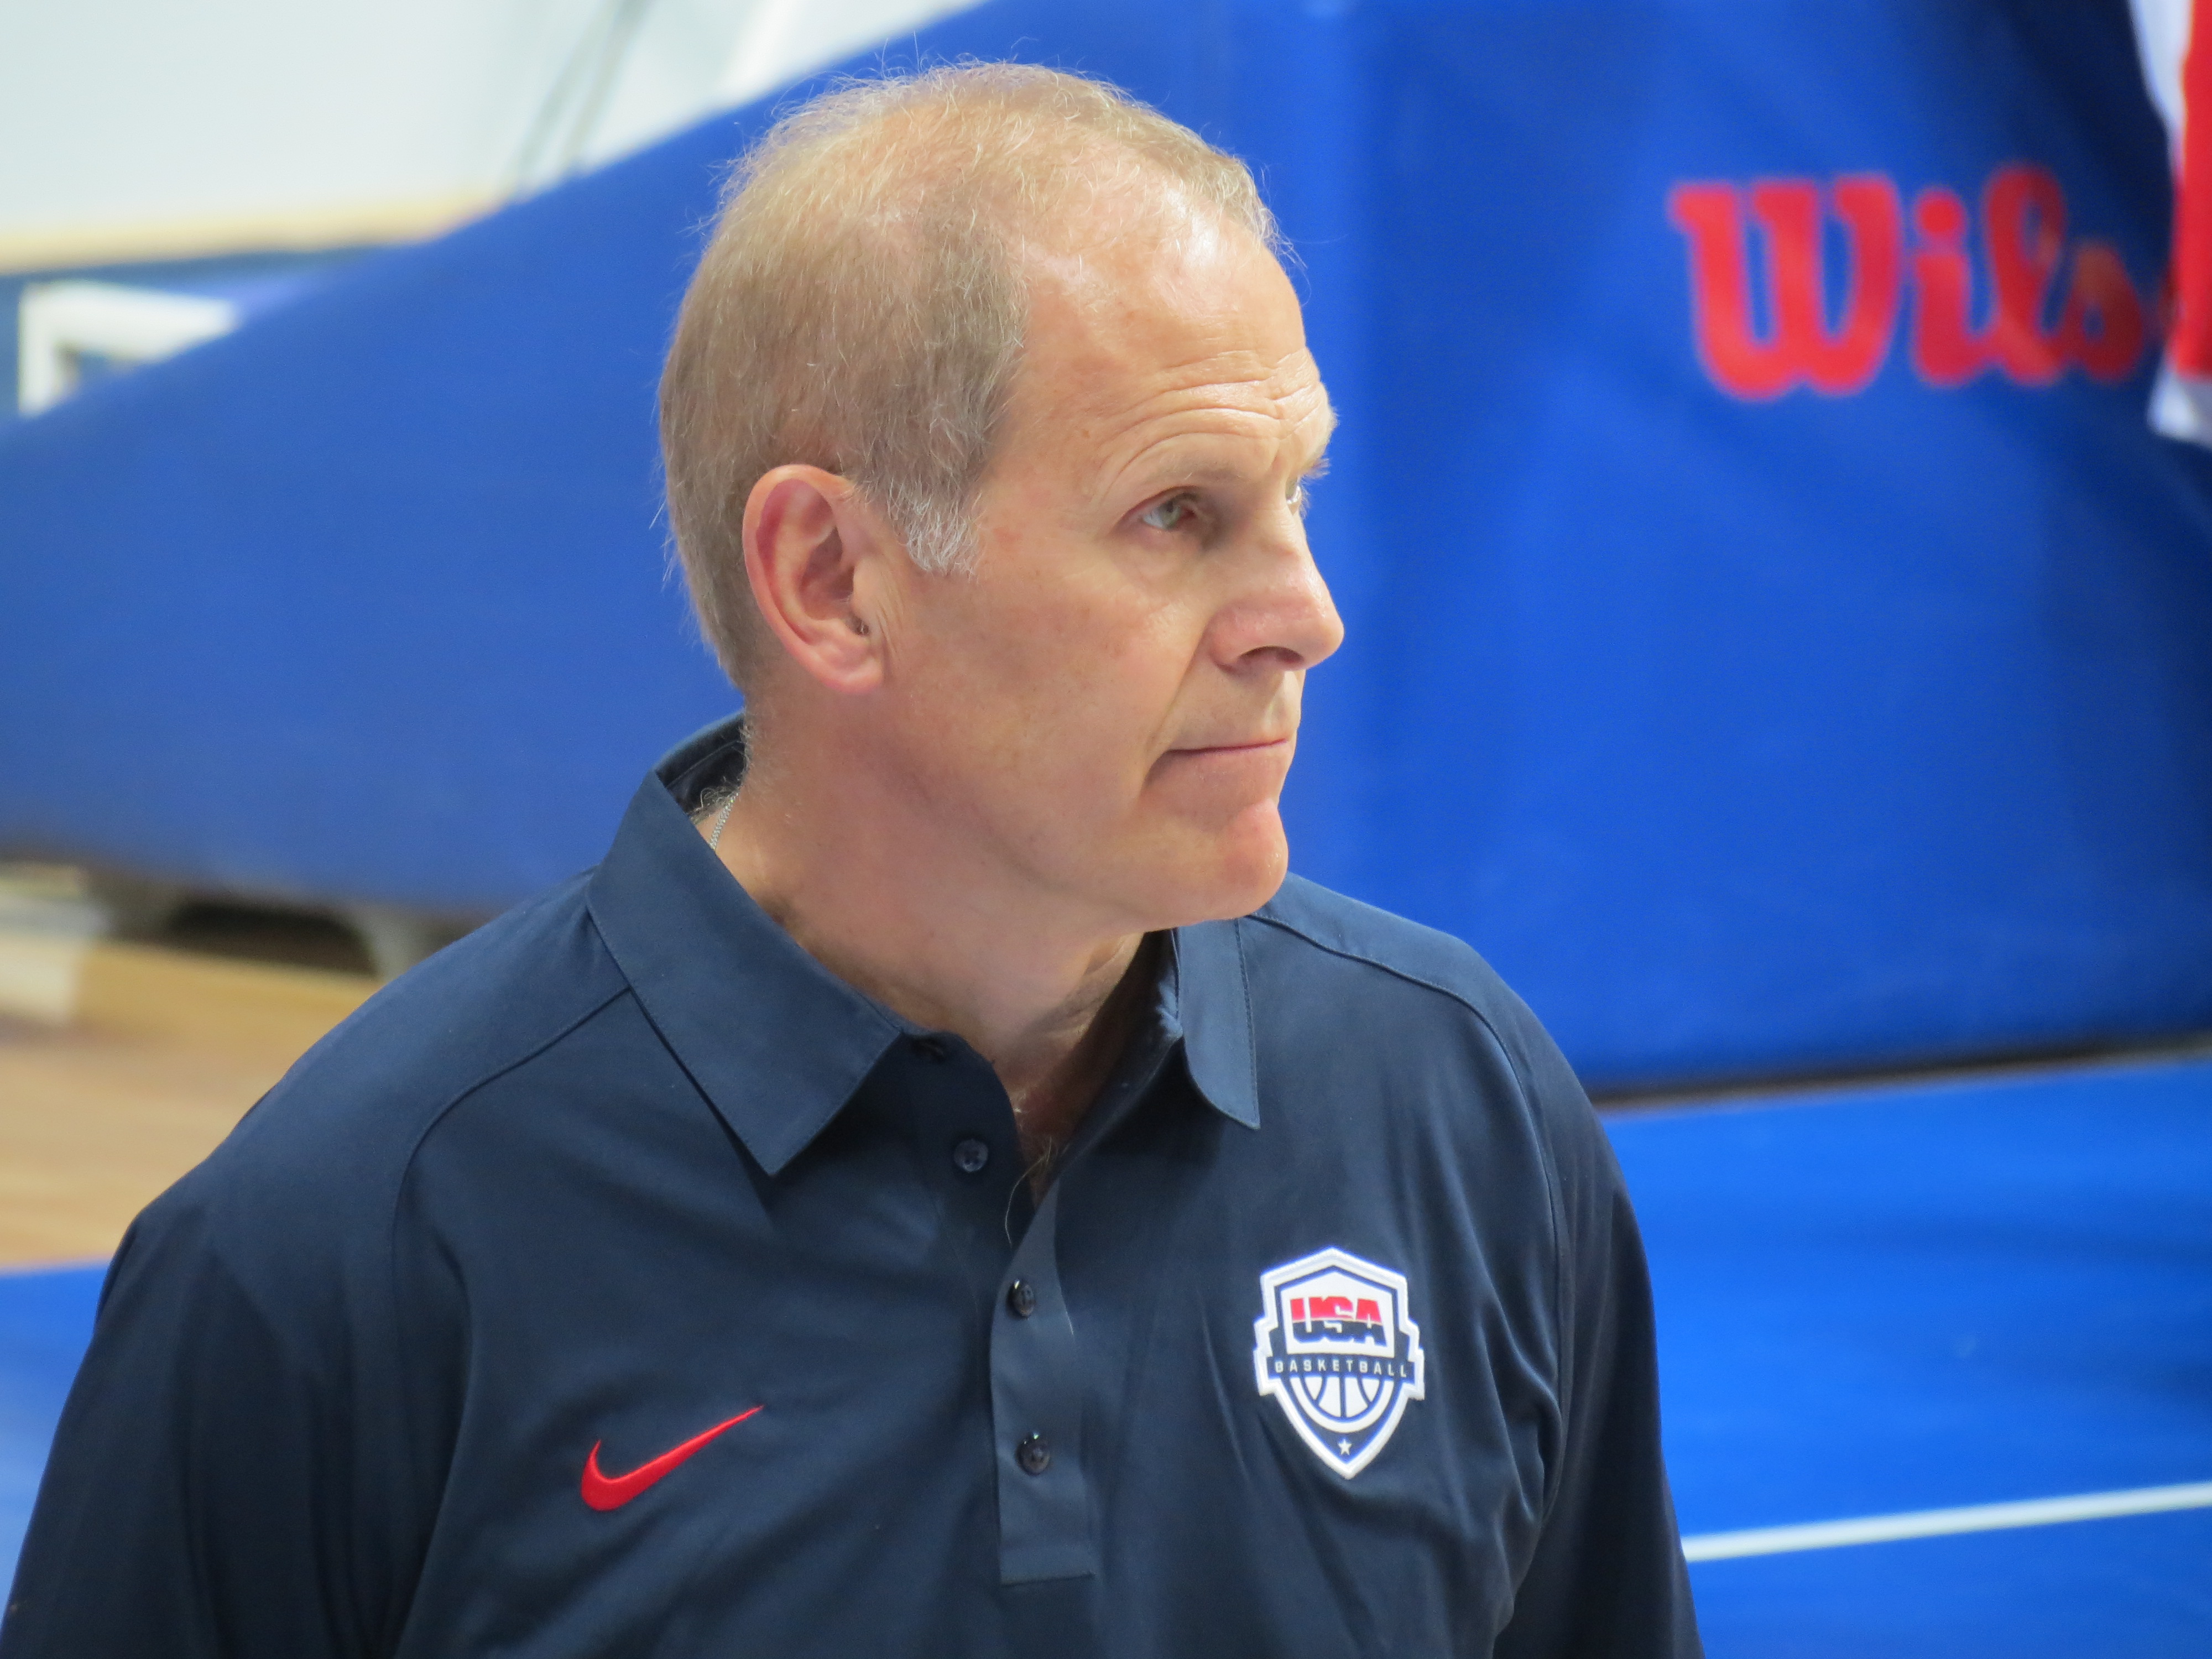 USA Basketball’s Beilein talks Universiade and Michigan | Tidcombe Sports4000 x 3000